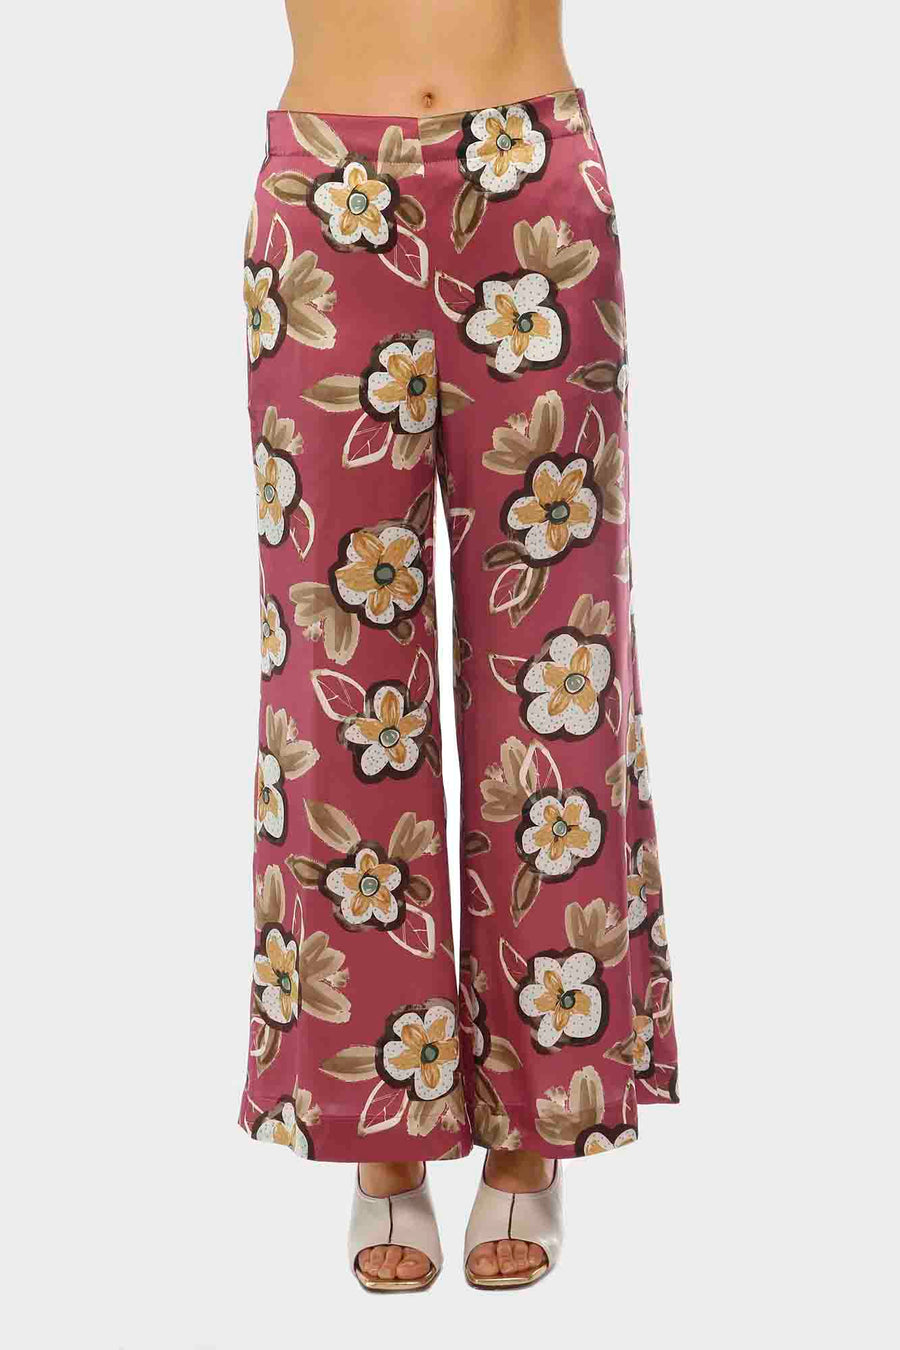 Pantalone Balia in seta a fiori  p09t24